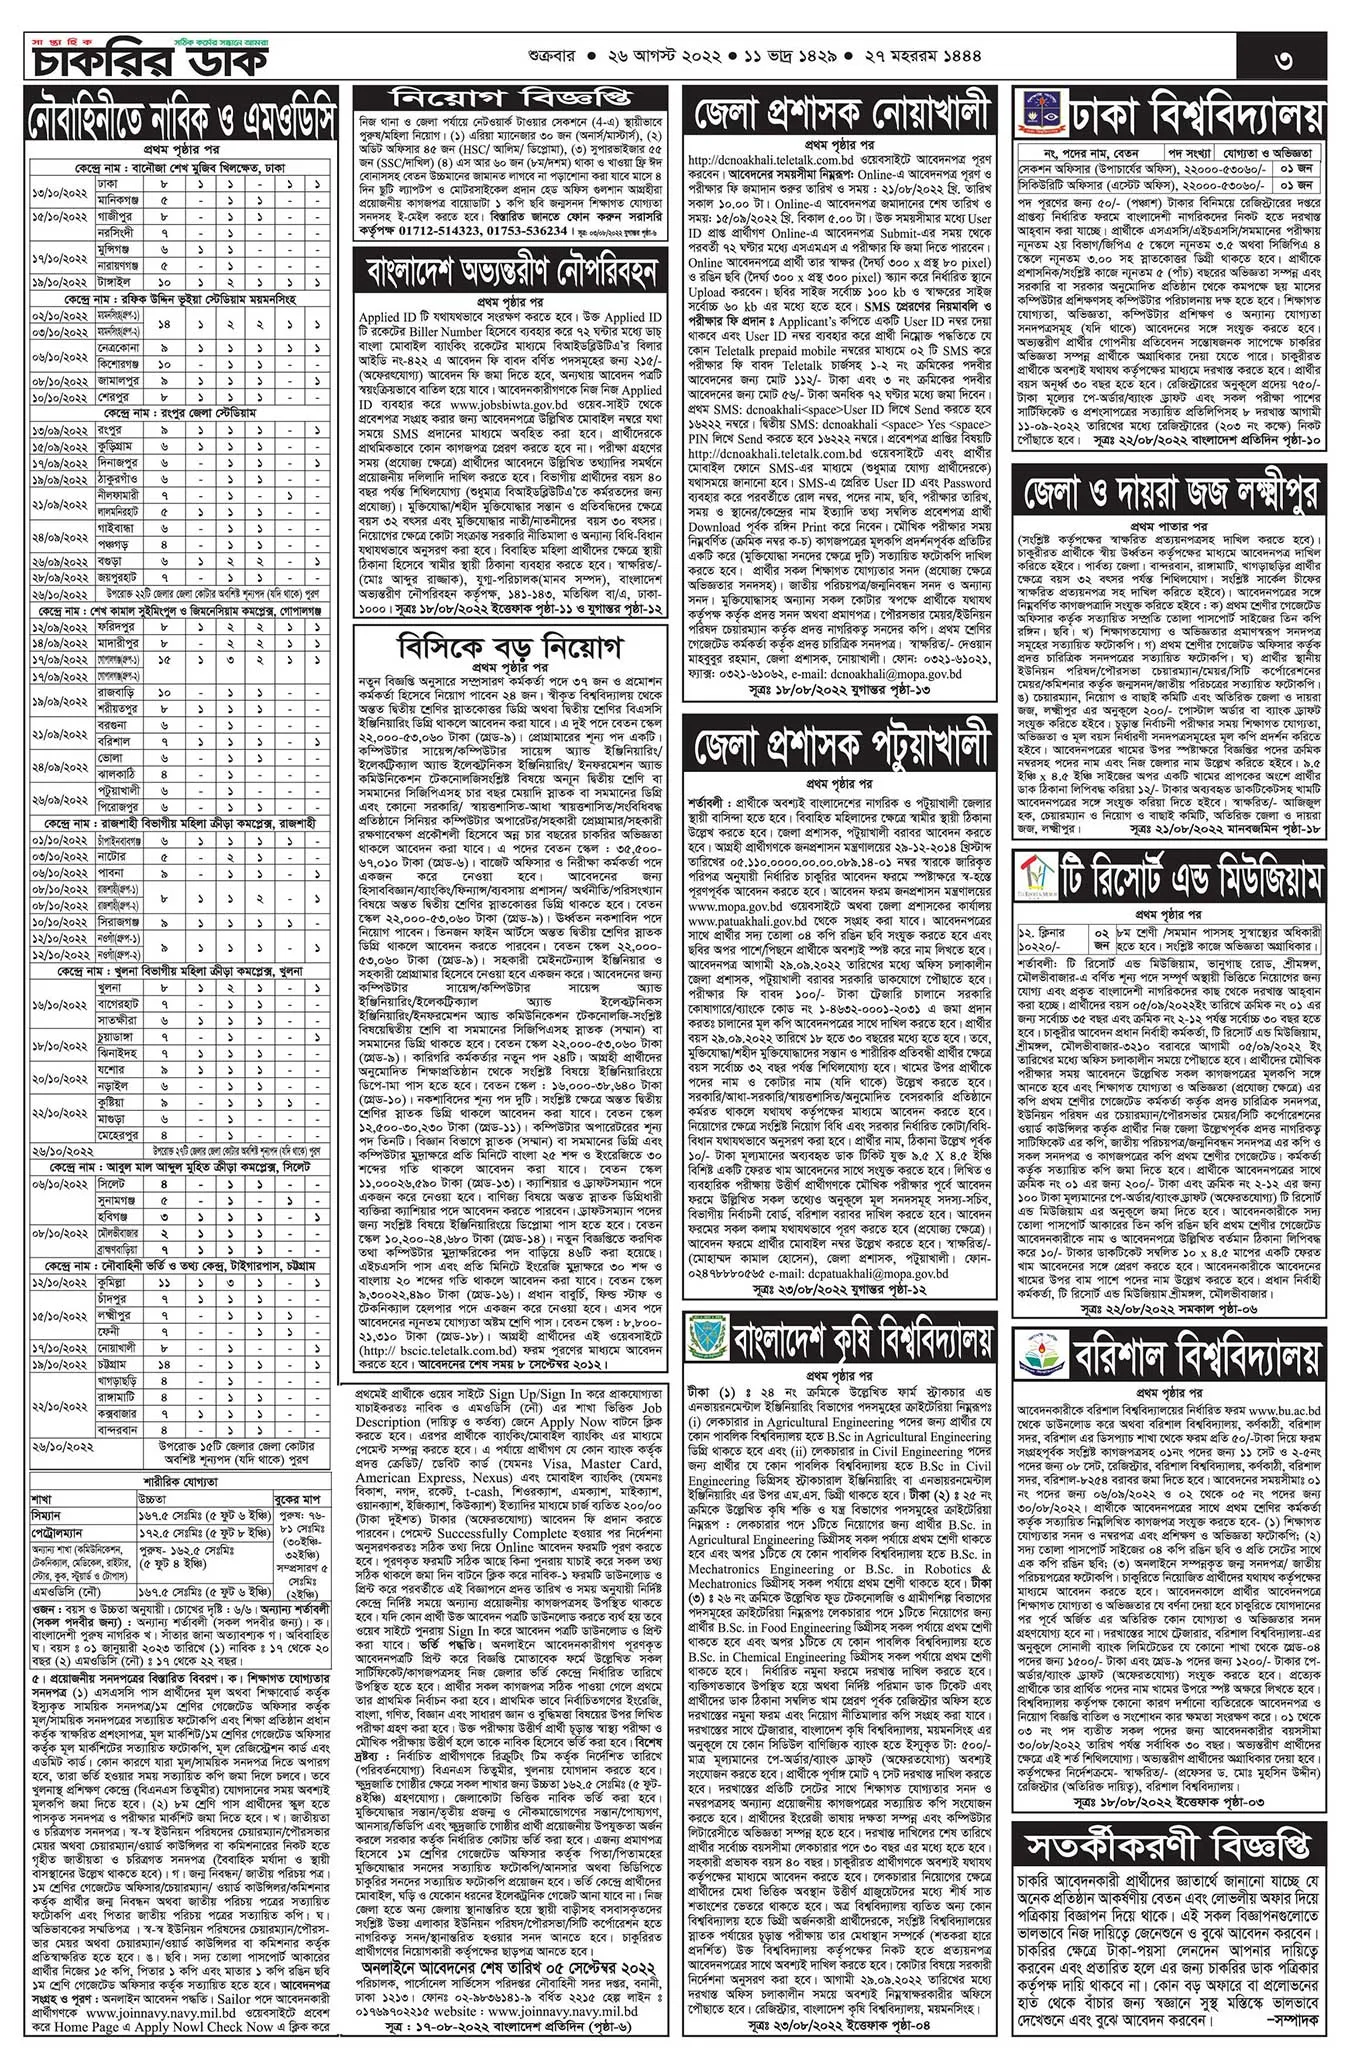 Job news weekly newspaper